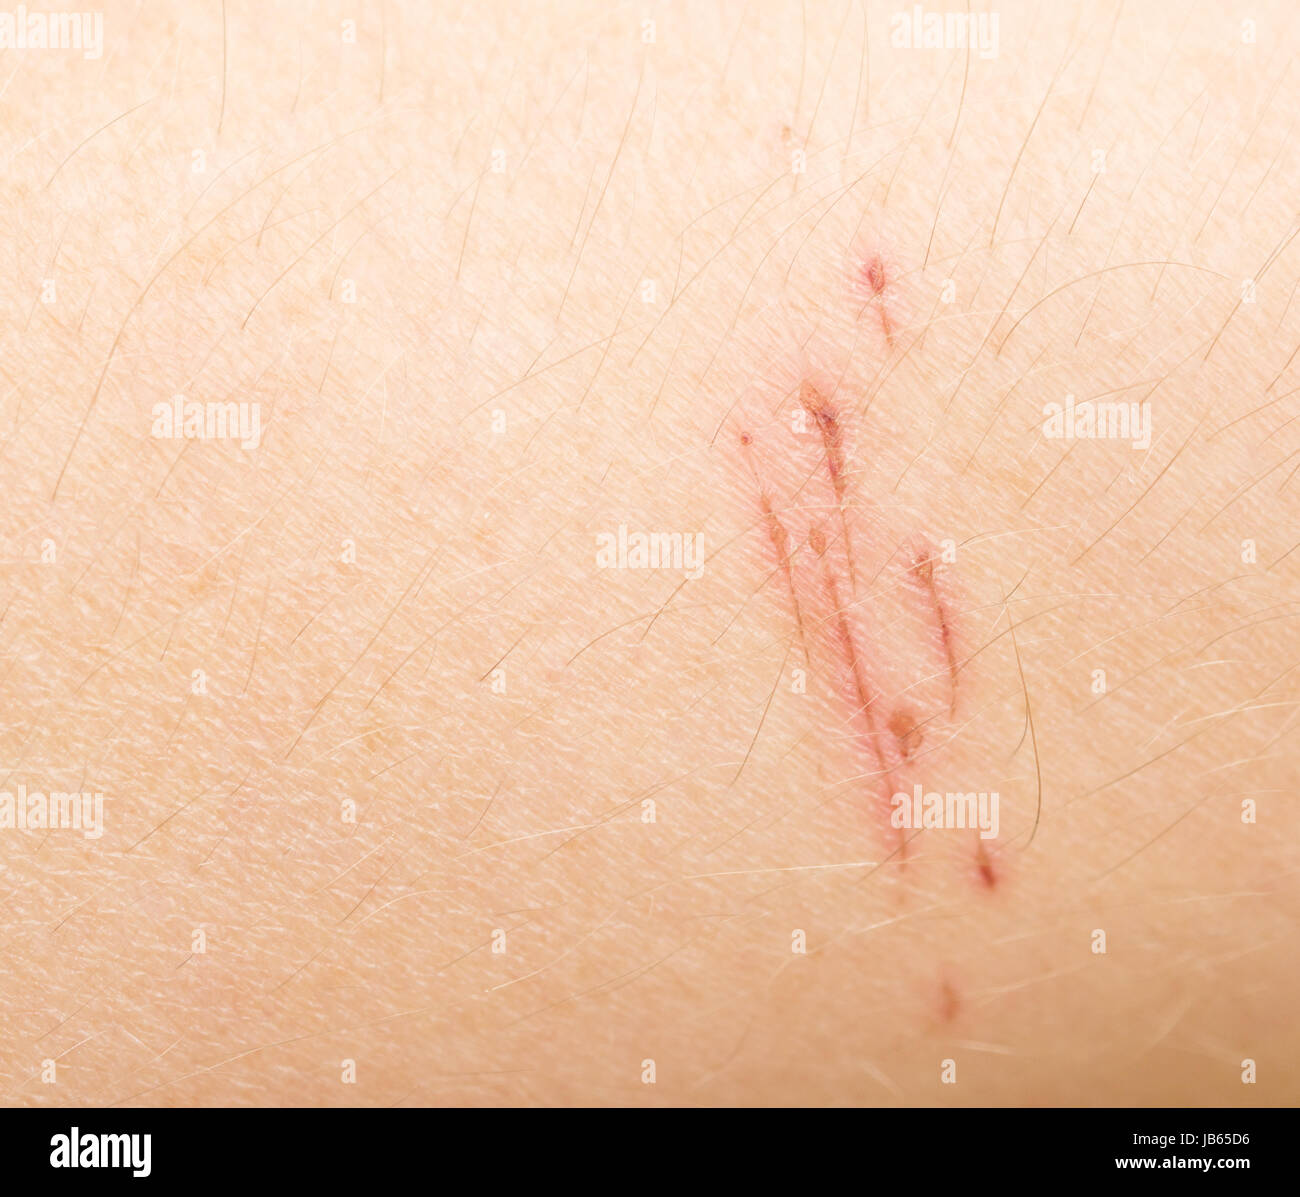 Graffi sulla pelle umana Foto stock - Alamy